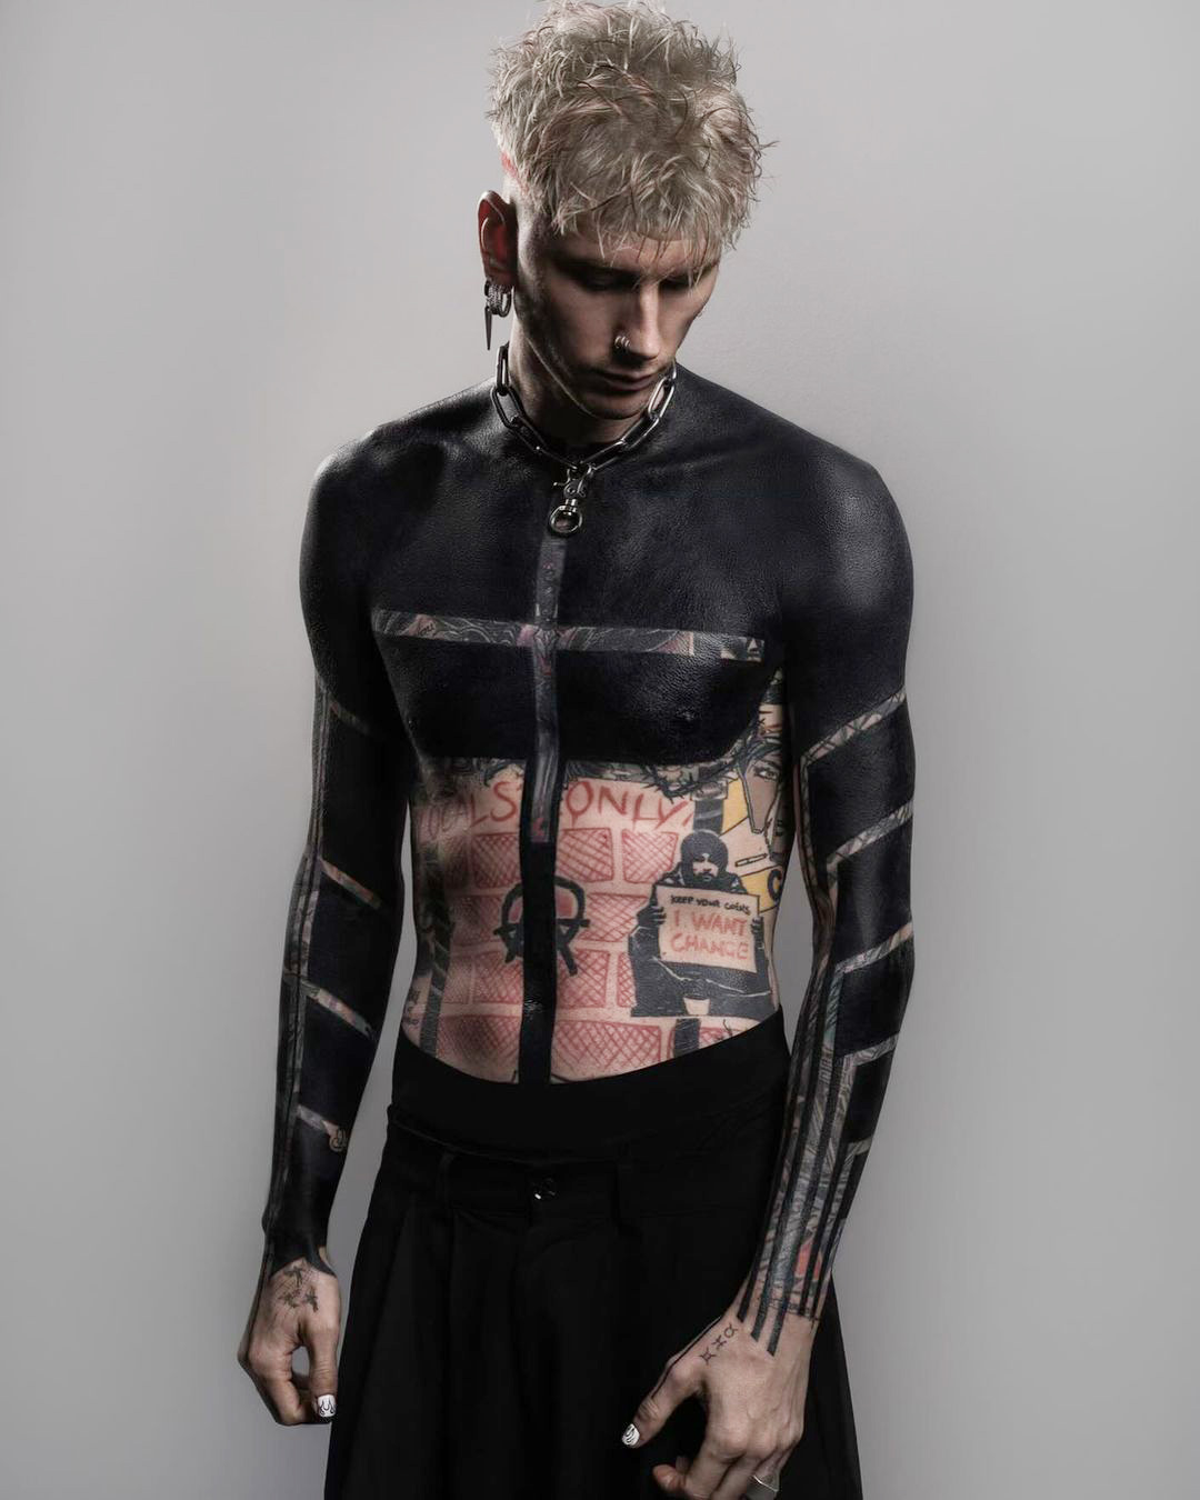 Machine Gun Kelly has unveiled his striking new upper body tattoo (Instagram / @machinegunkelly)